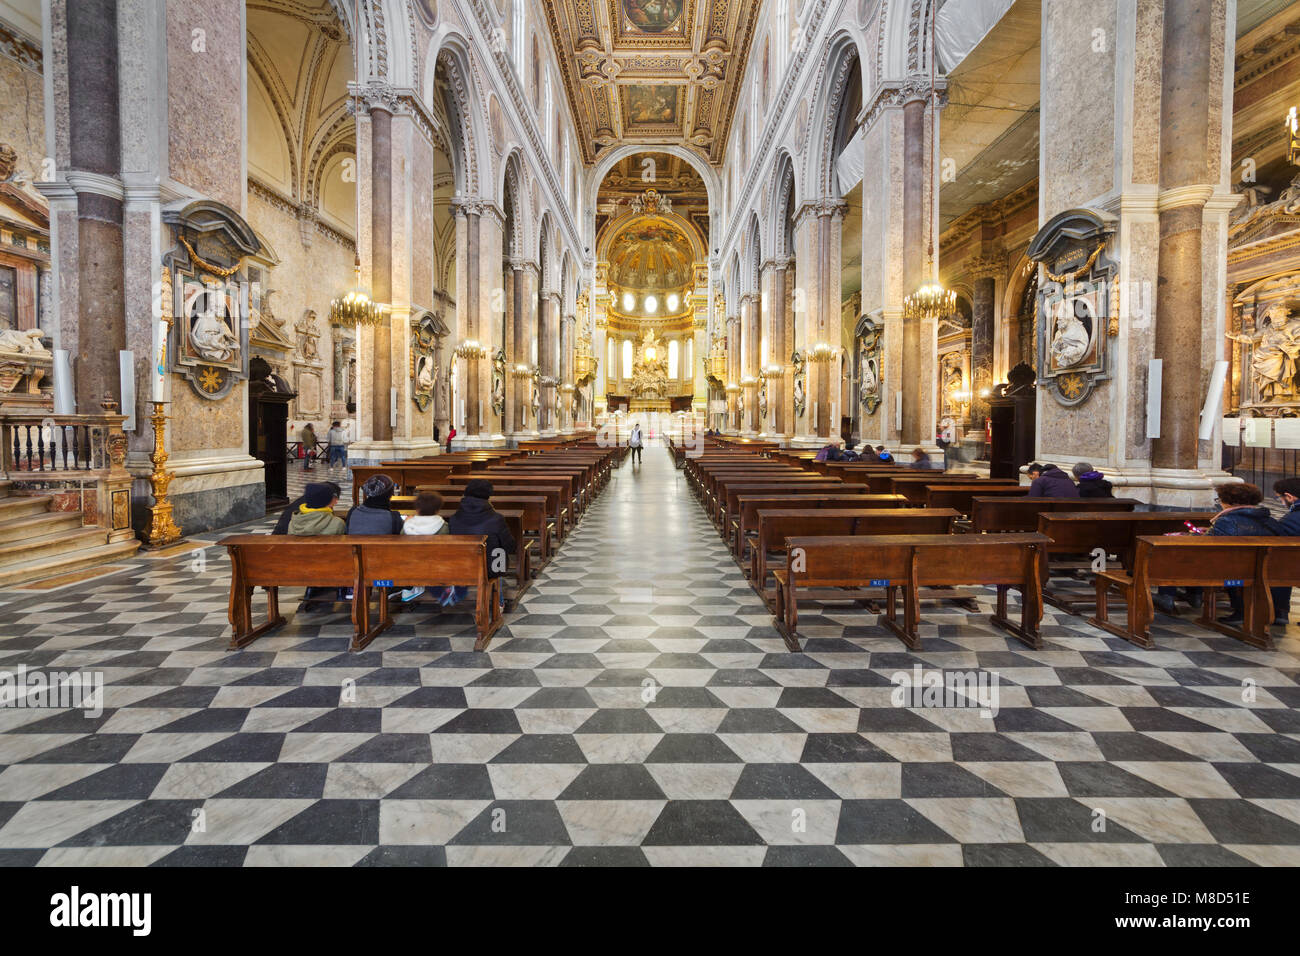 Cattedrale di Santa Maria Assunta - Catedral de Nápoles - Interior Foto de stock